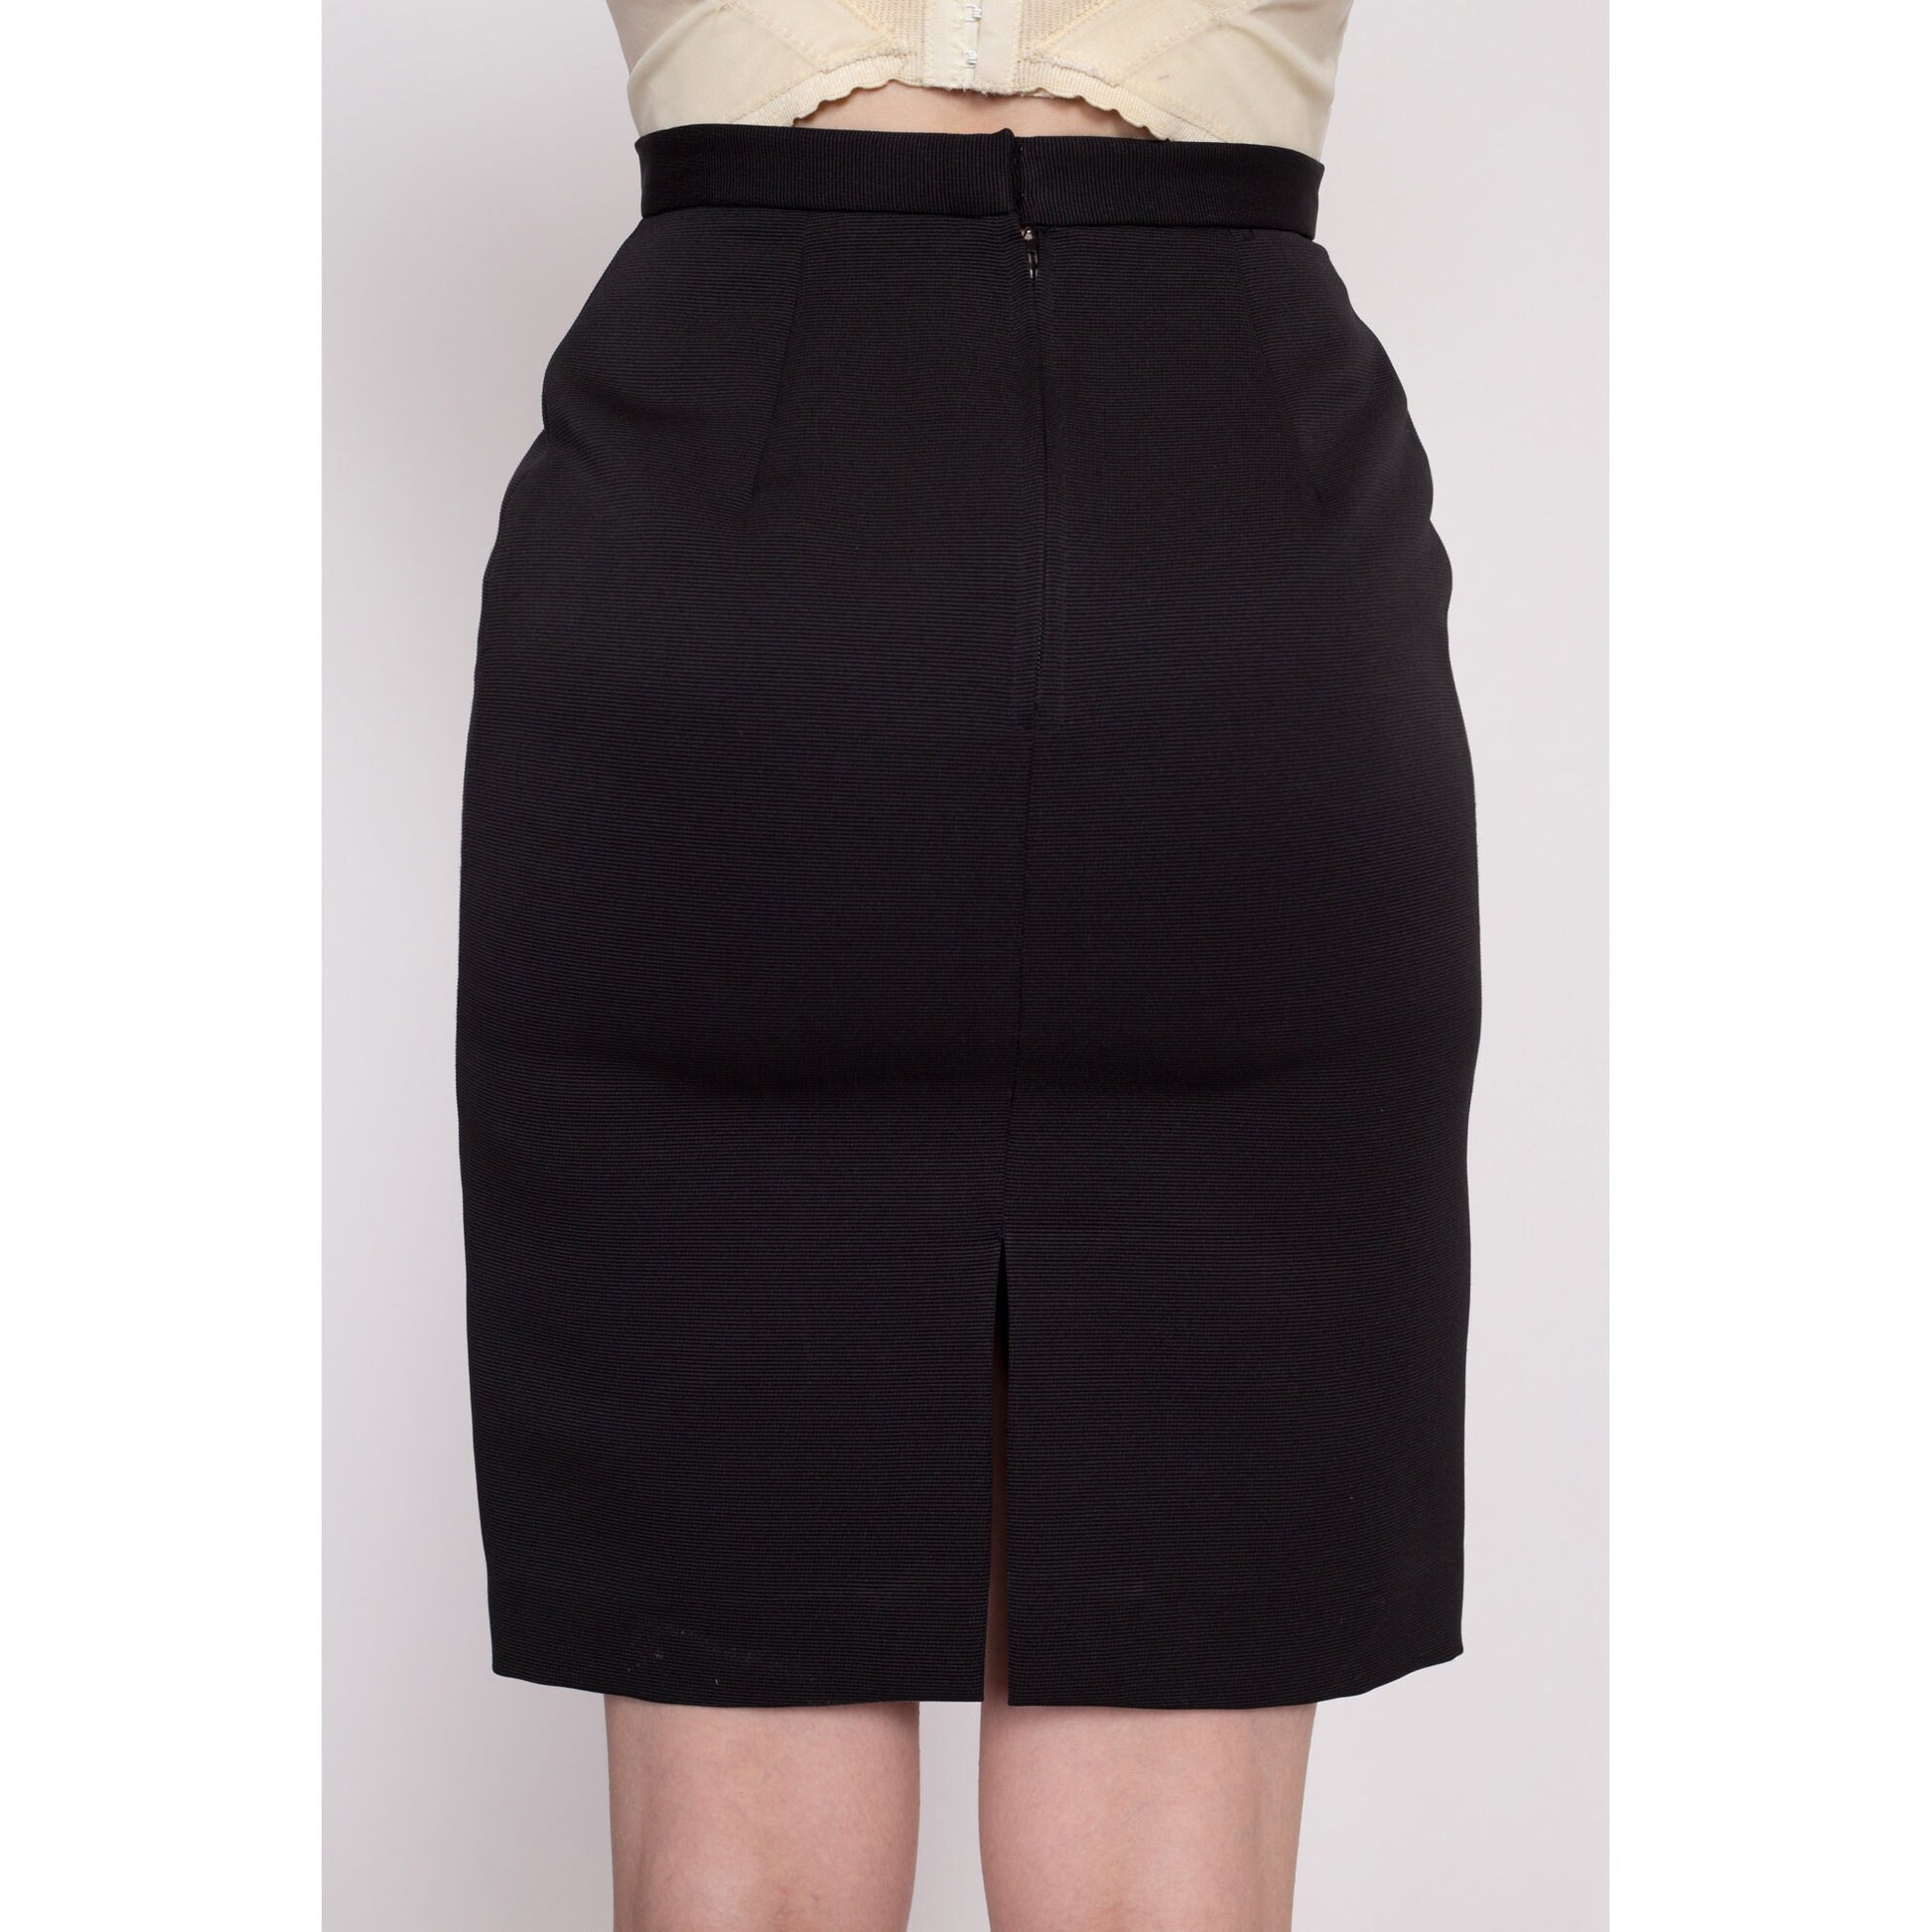 70s Black High Waisted Pencil Skirt - Extra Small, 24.5" | Vintage Minimalist Fitted Mini Skirt